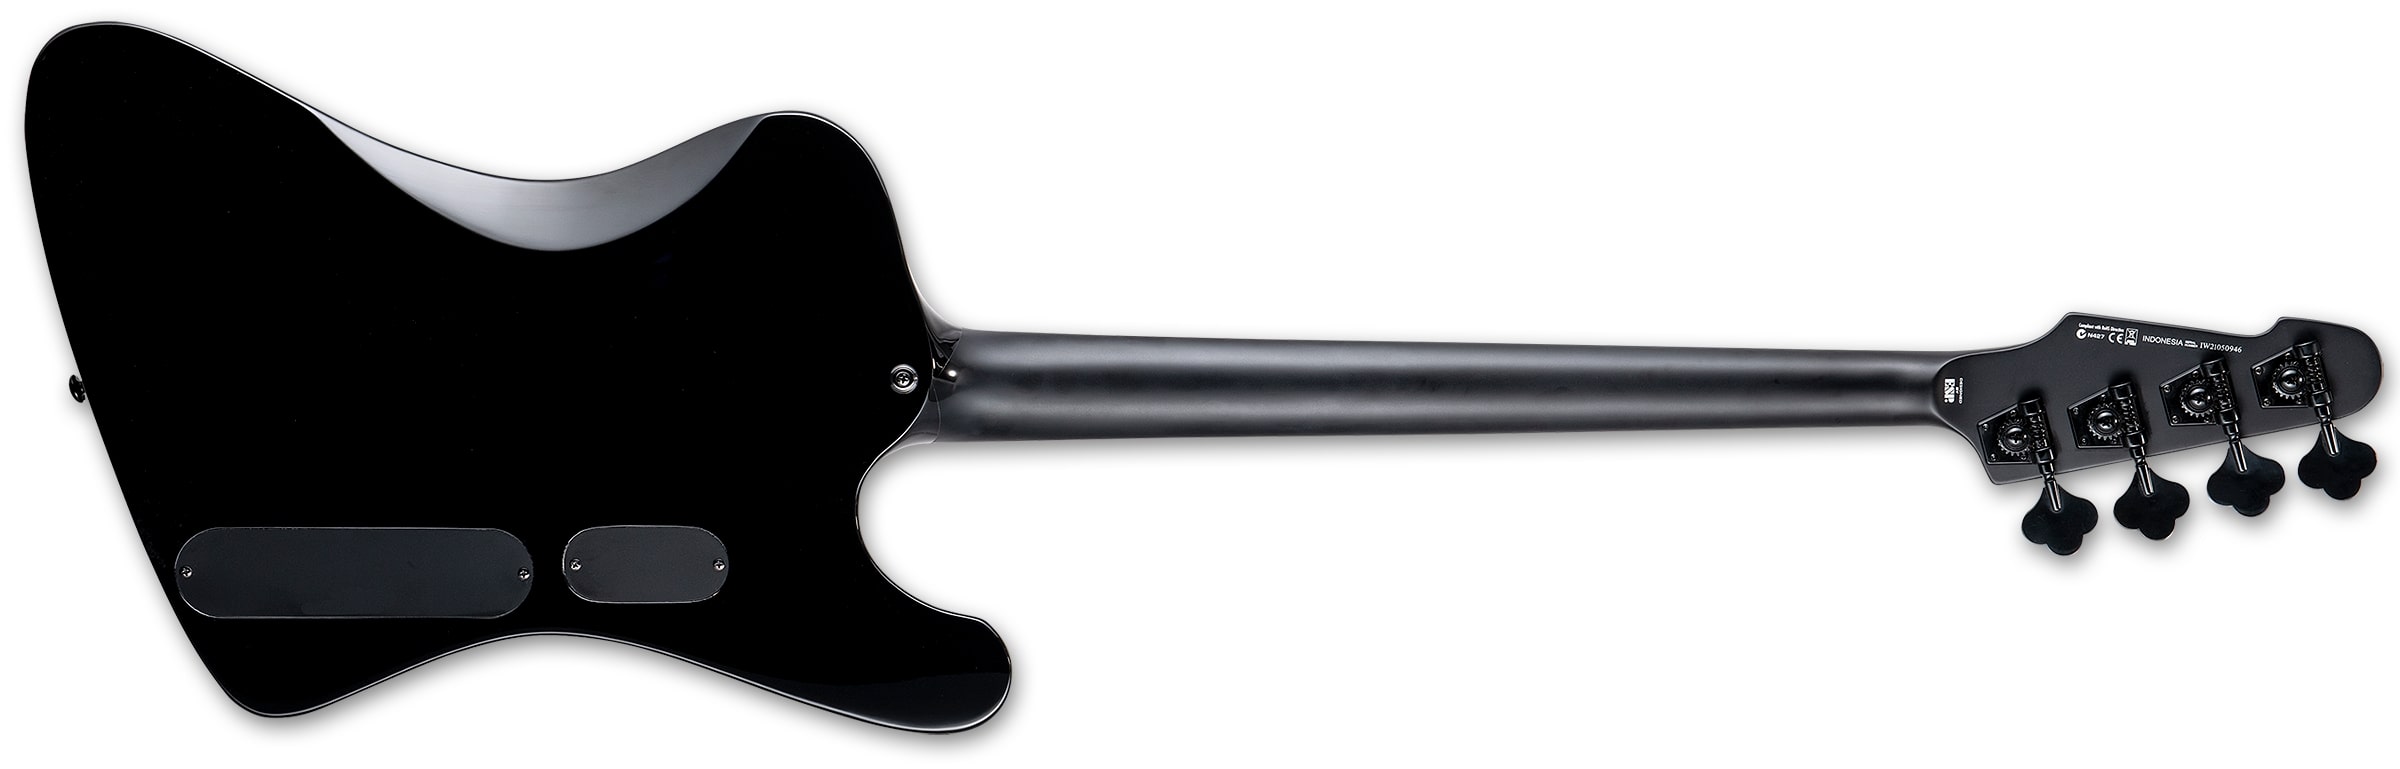 ESP LTD PHOENIX-1004 Left-Handed 4-String Electric Bass, Black LPHOENIX1004BLKLH